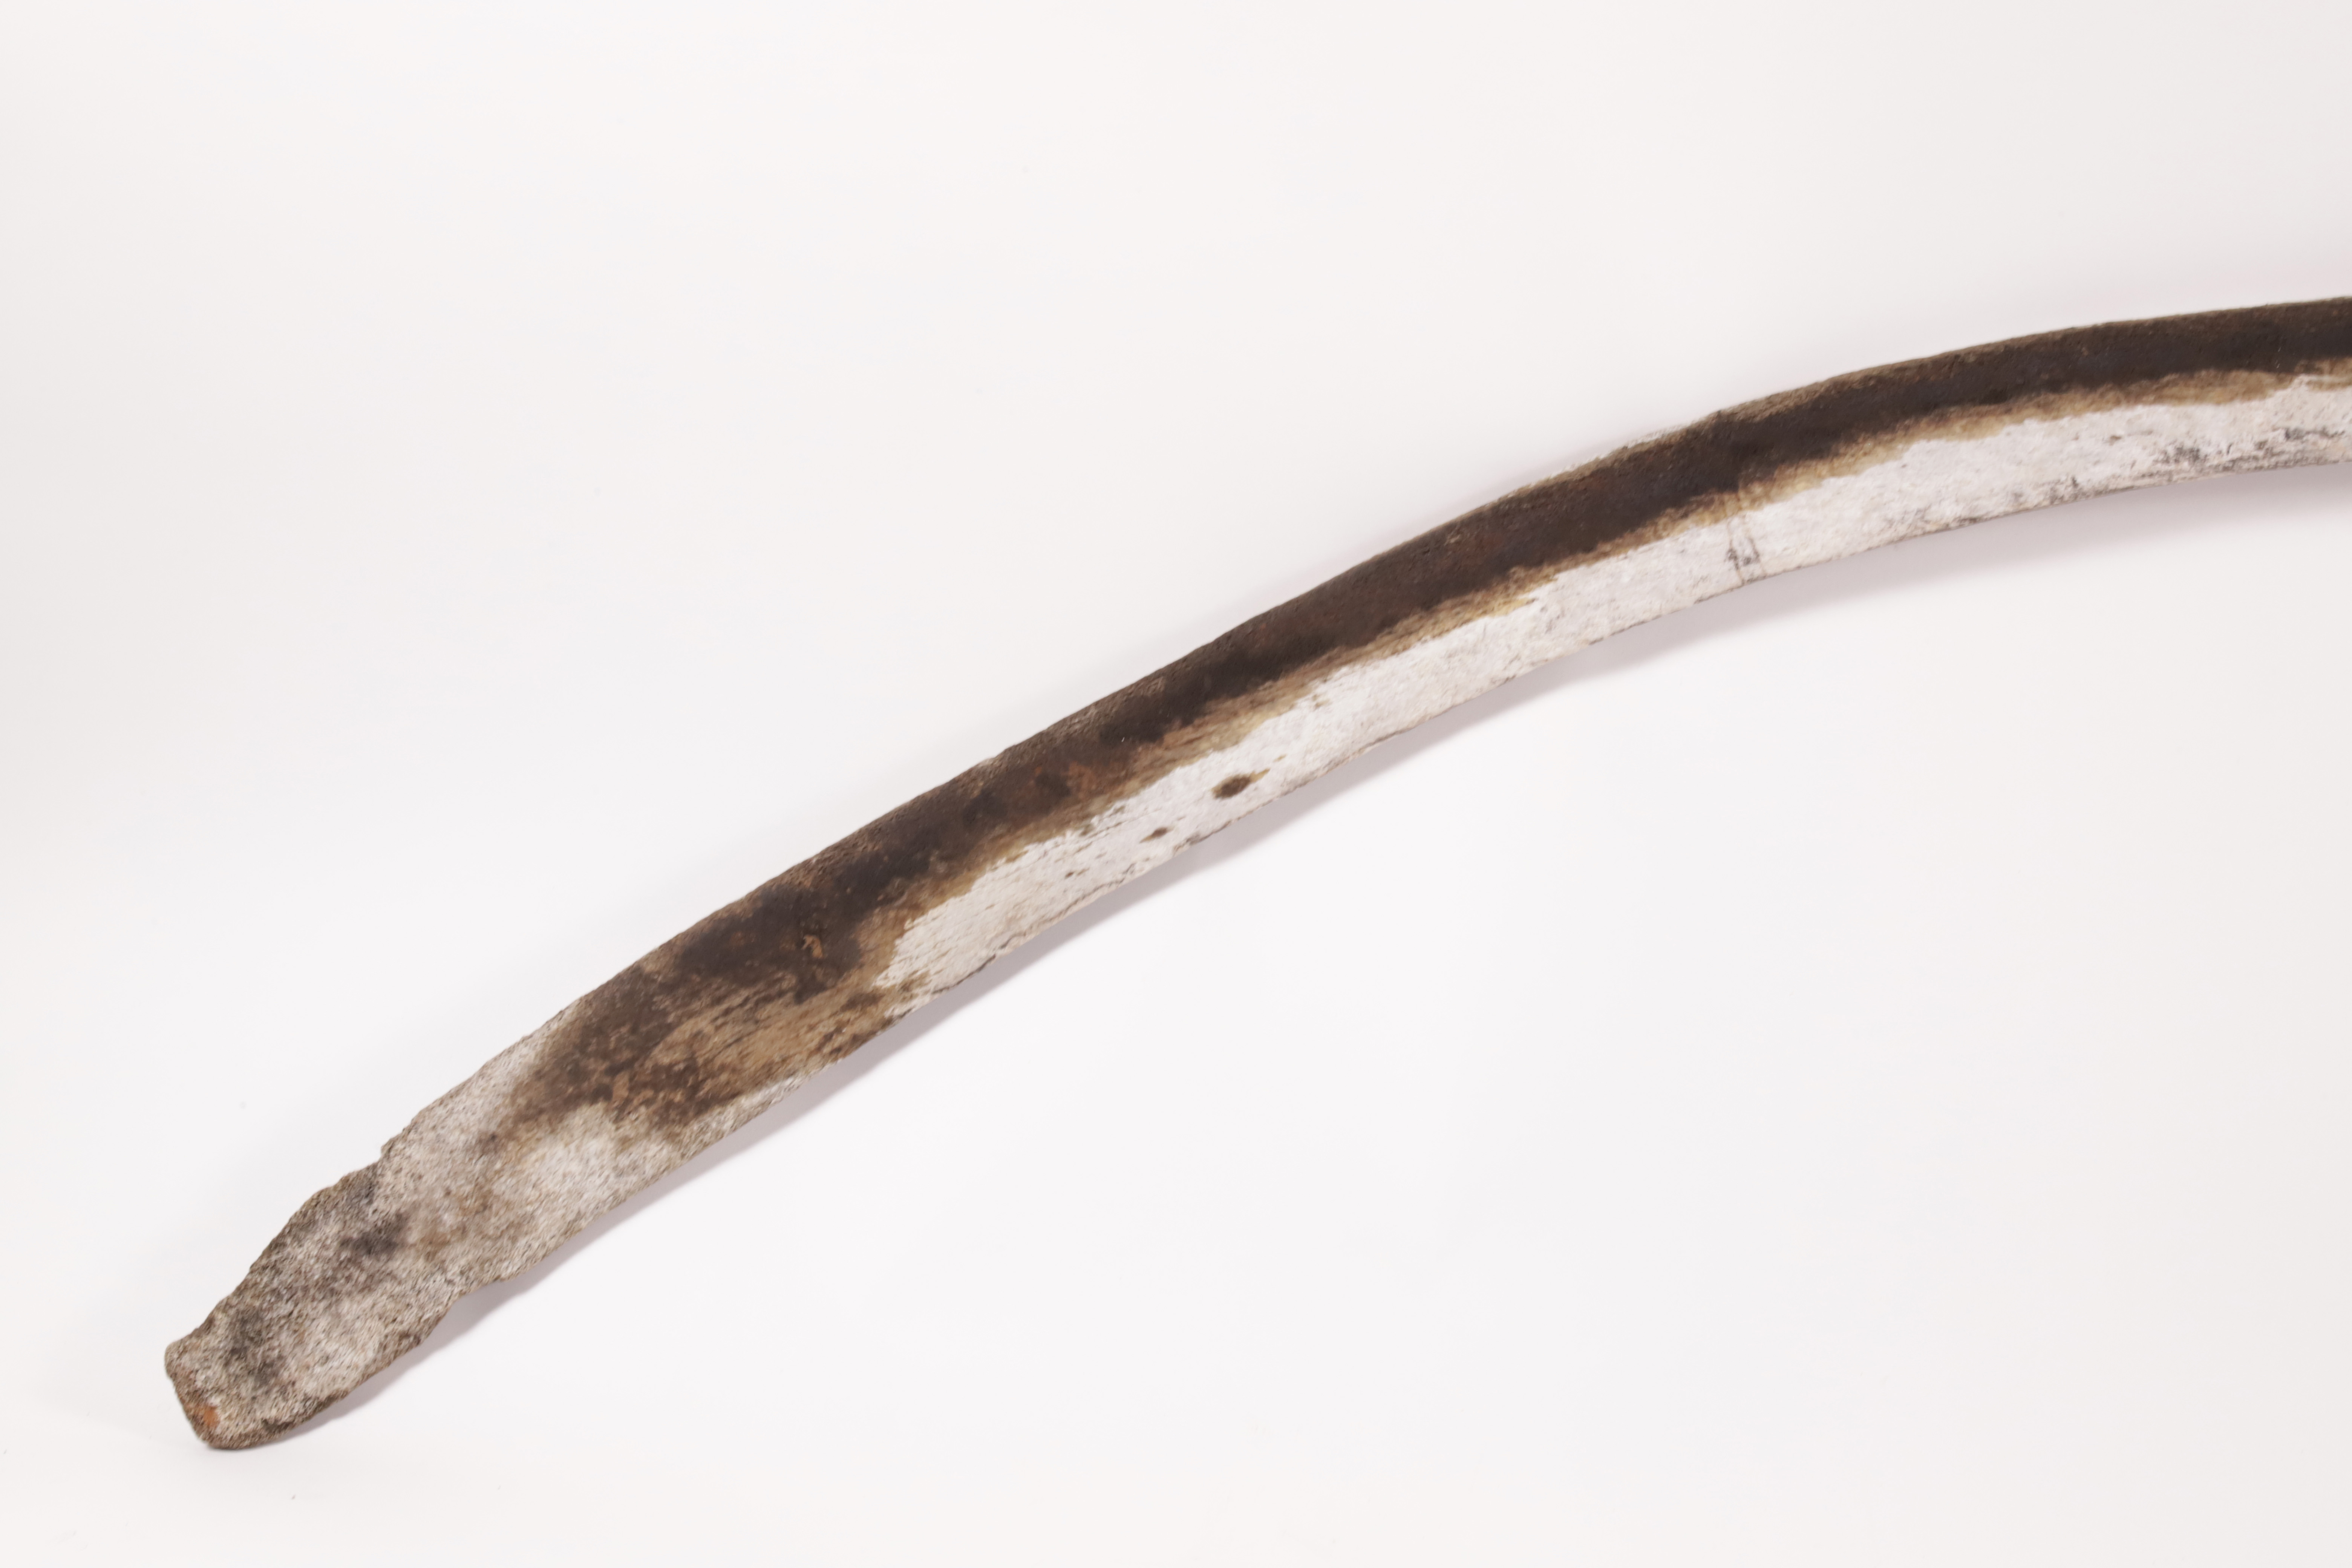  Antique Whale Rib Bone, 19th Century